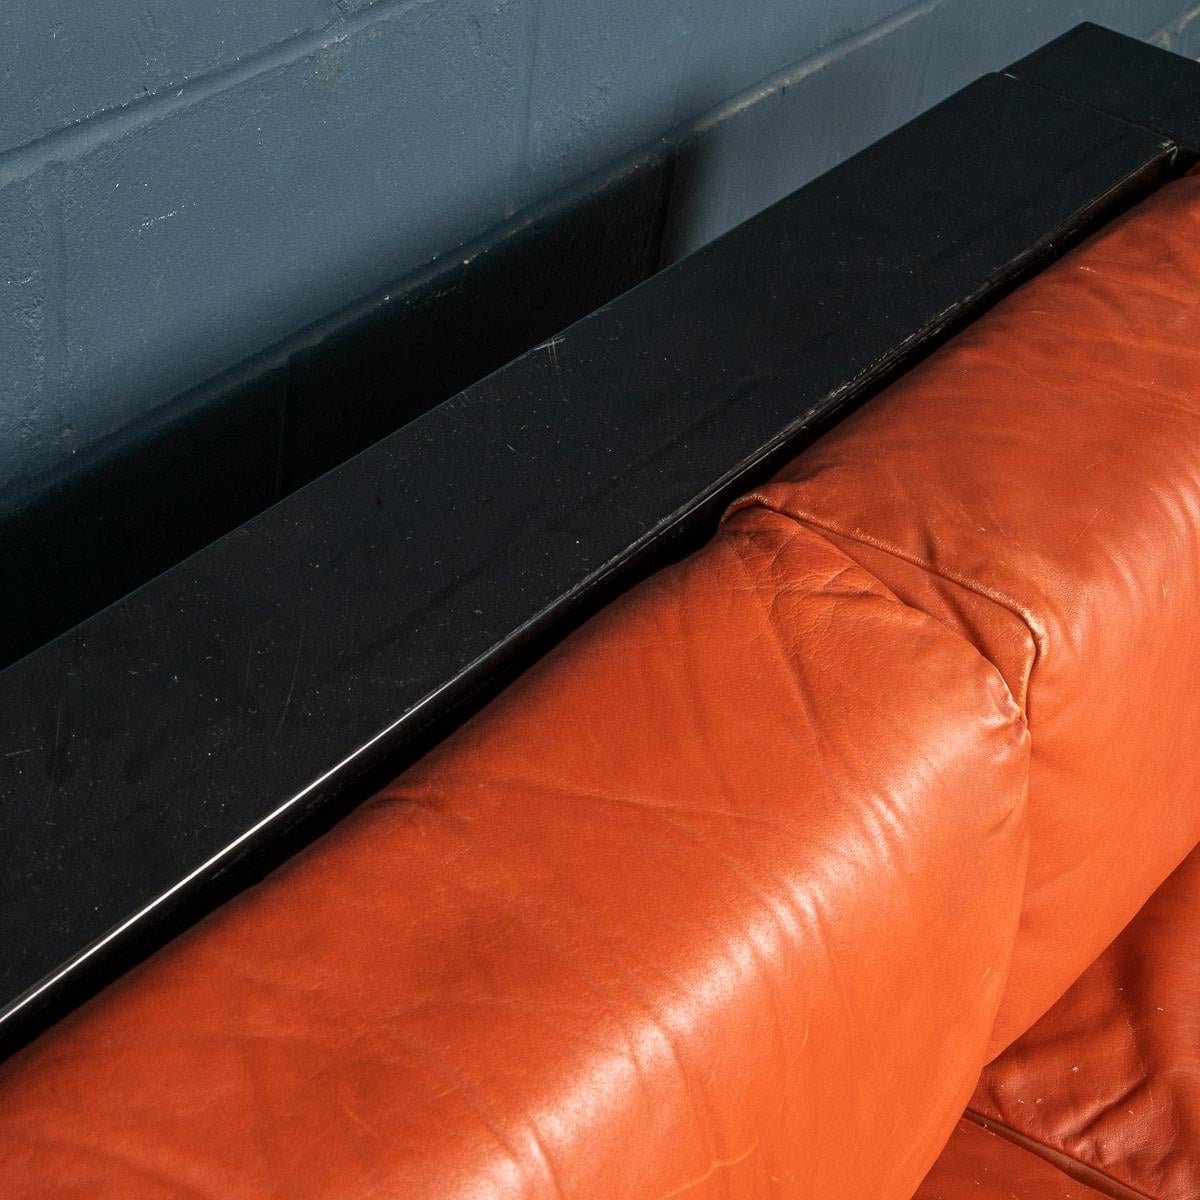 20th Century Two-Seater Sofa by Lella and Massimo Vignelli for Poltronova For Sale 5